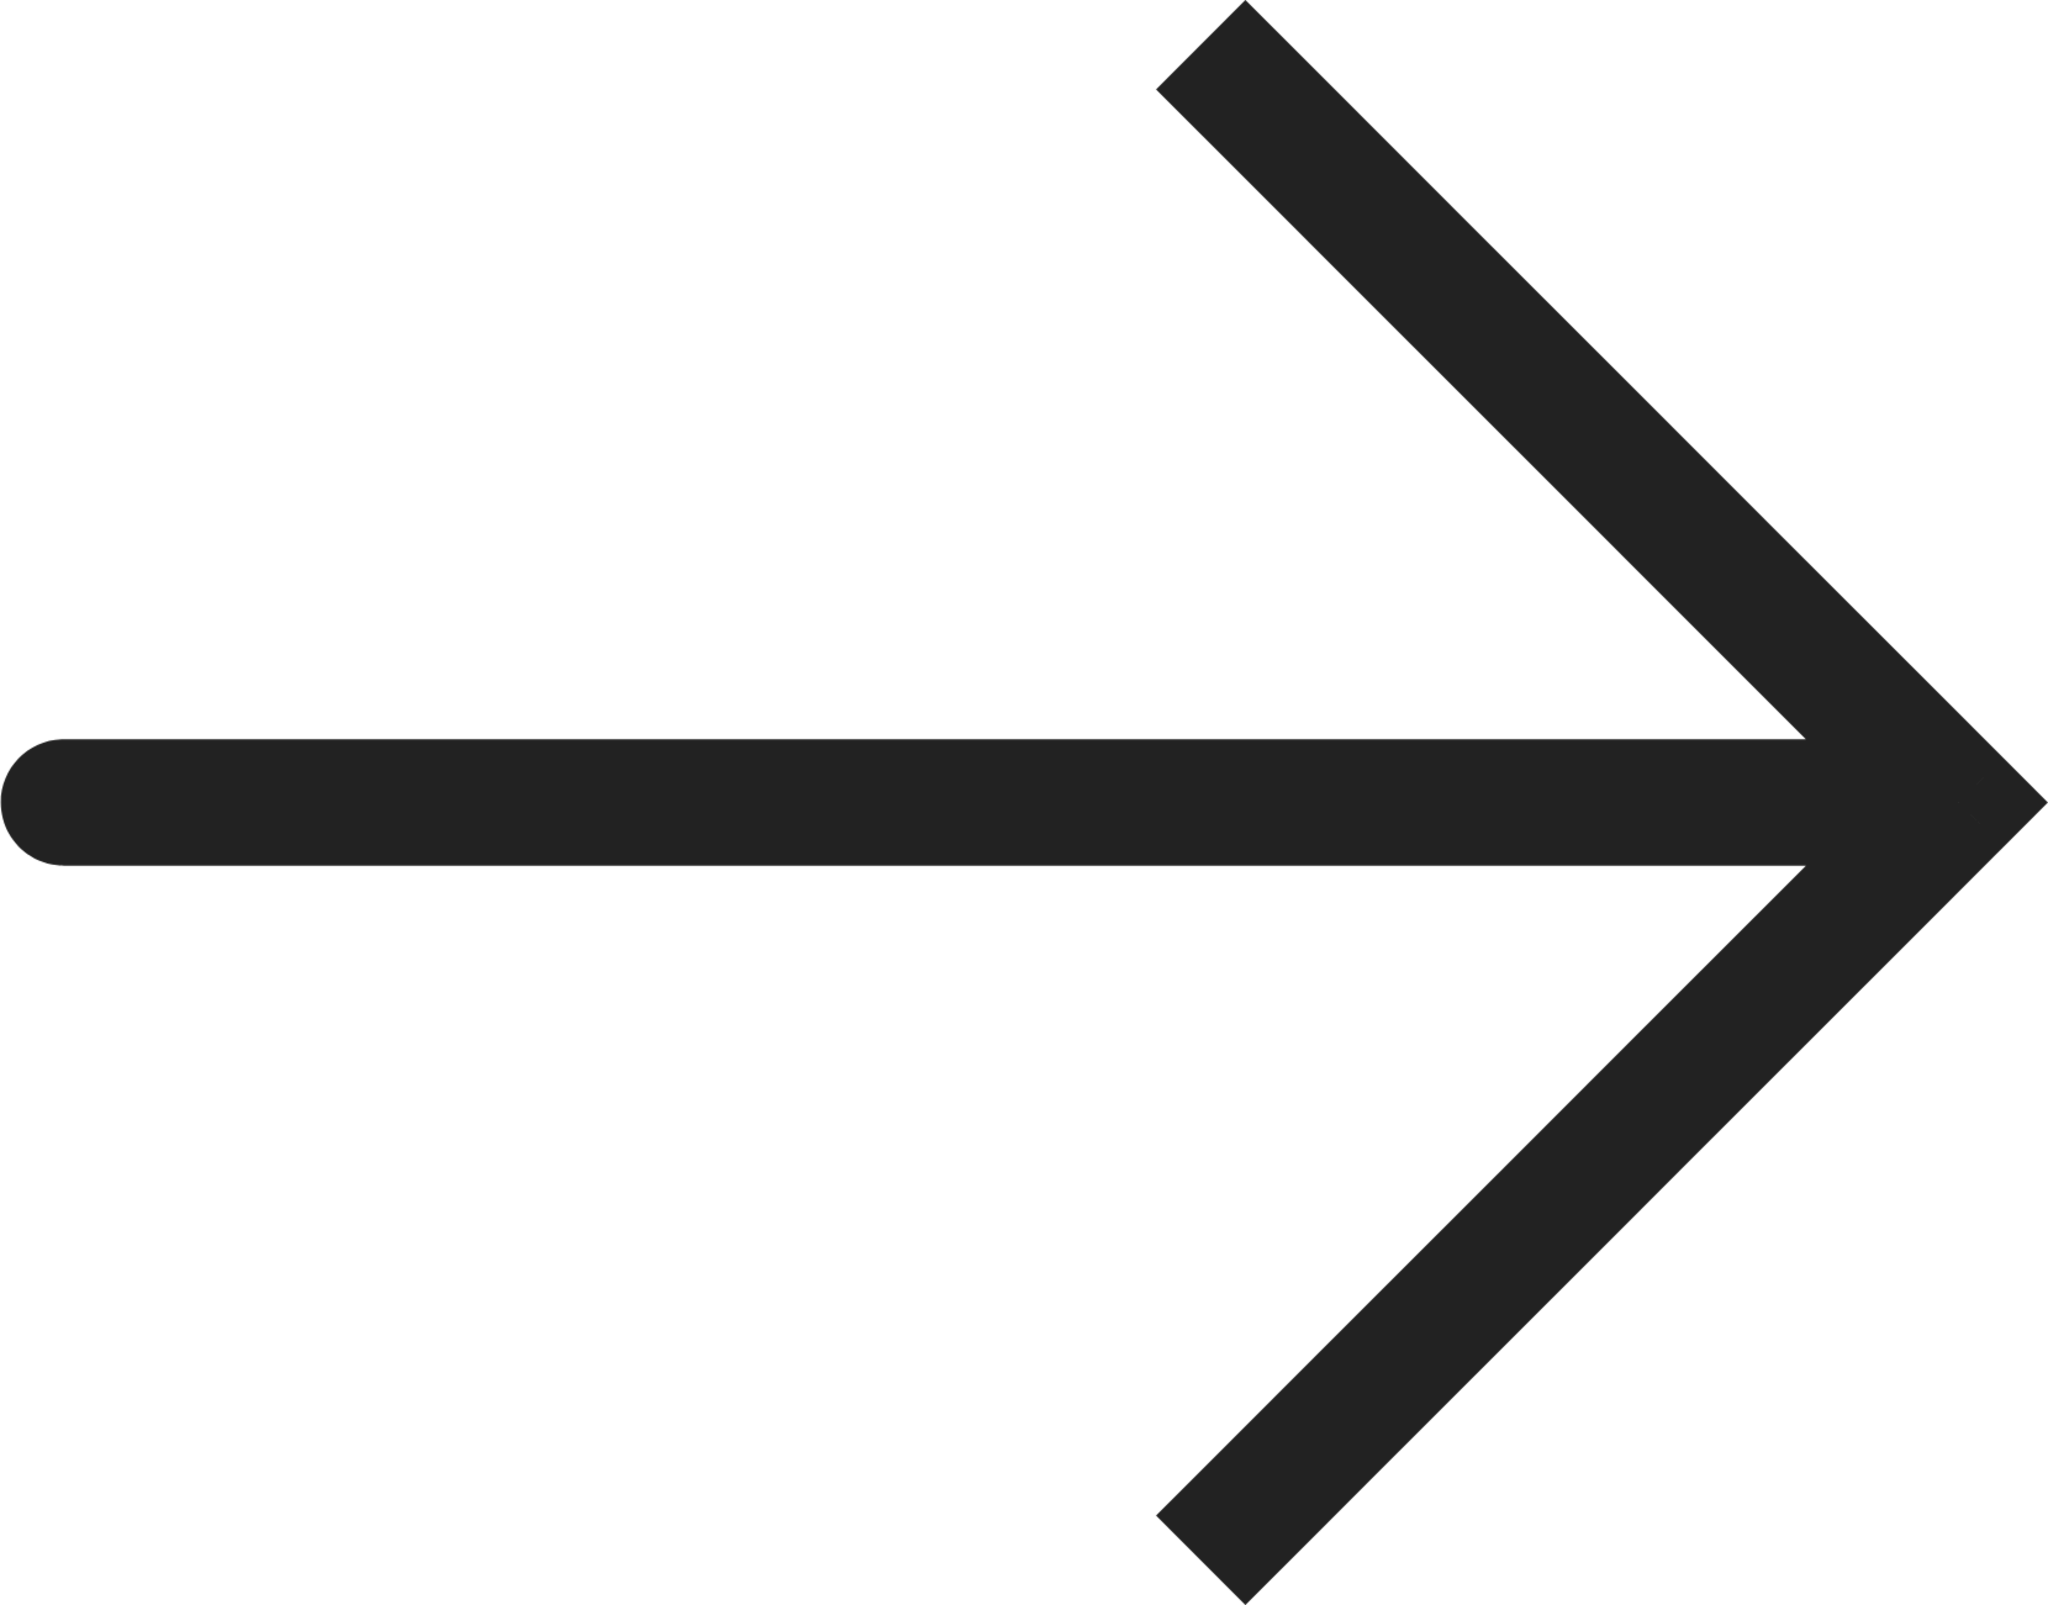 Arrow right light icon